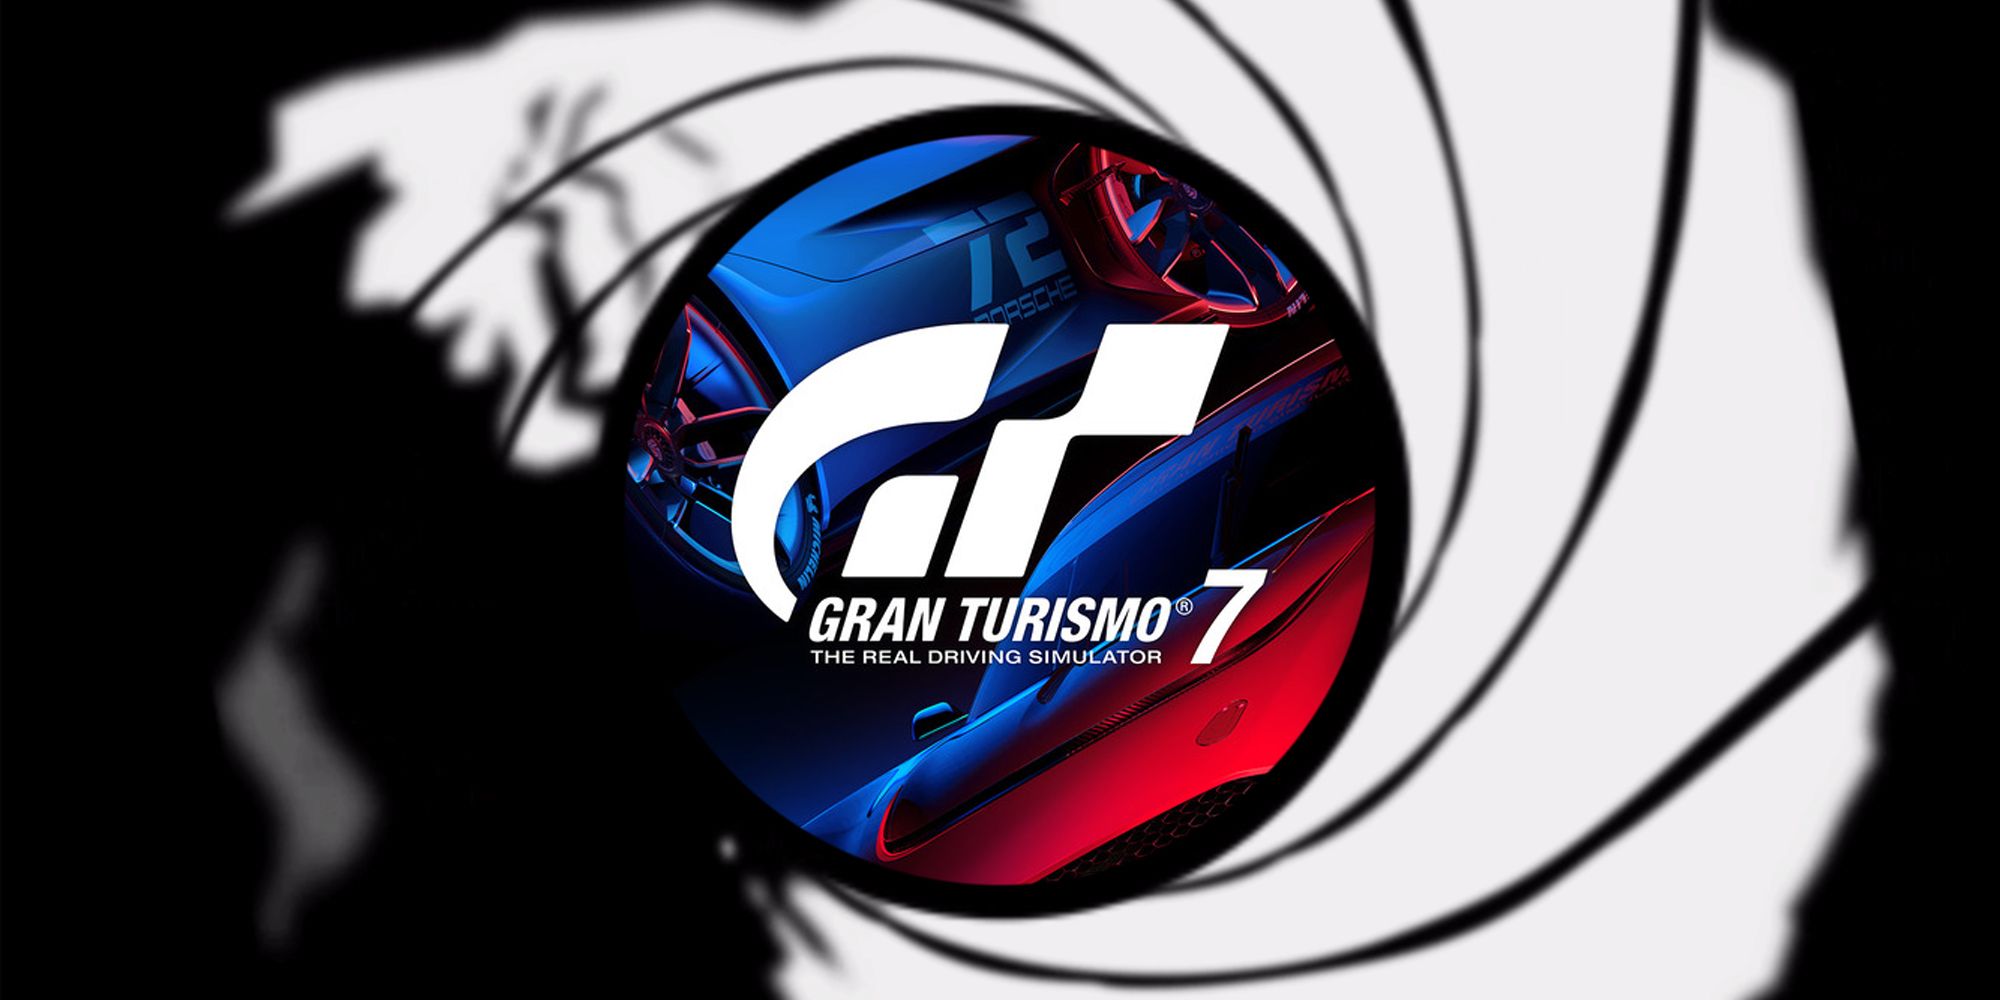 Gran Turismo 7 logo inside the 007 barrel